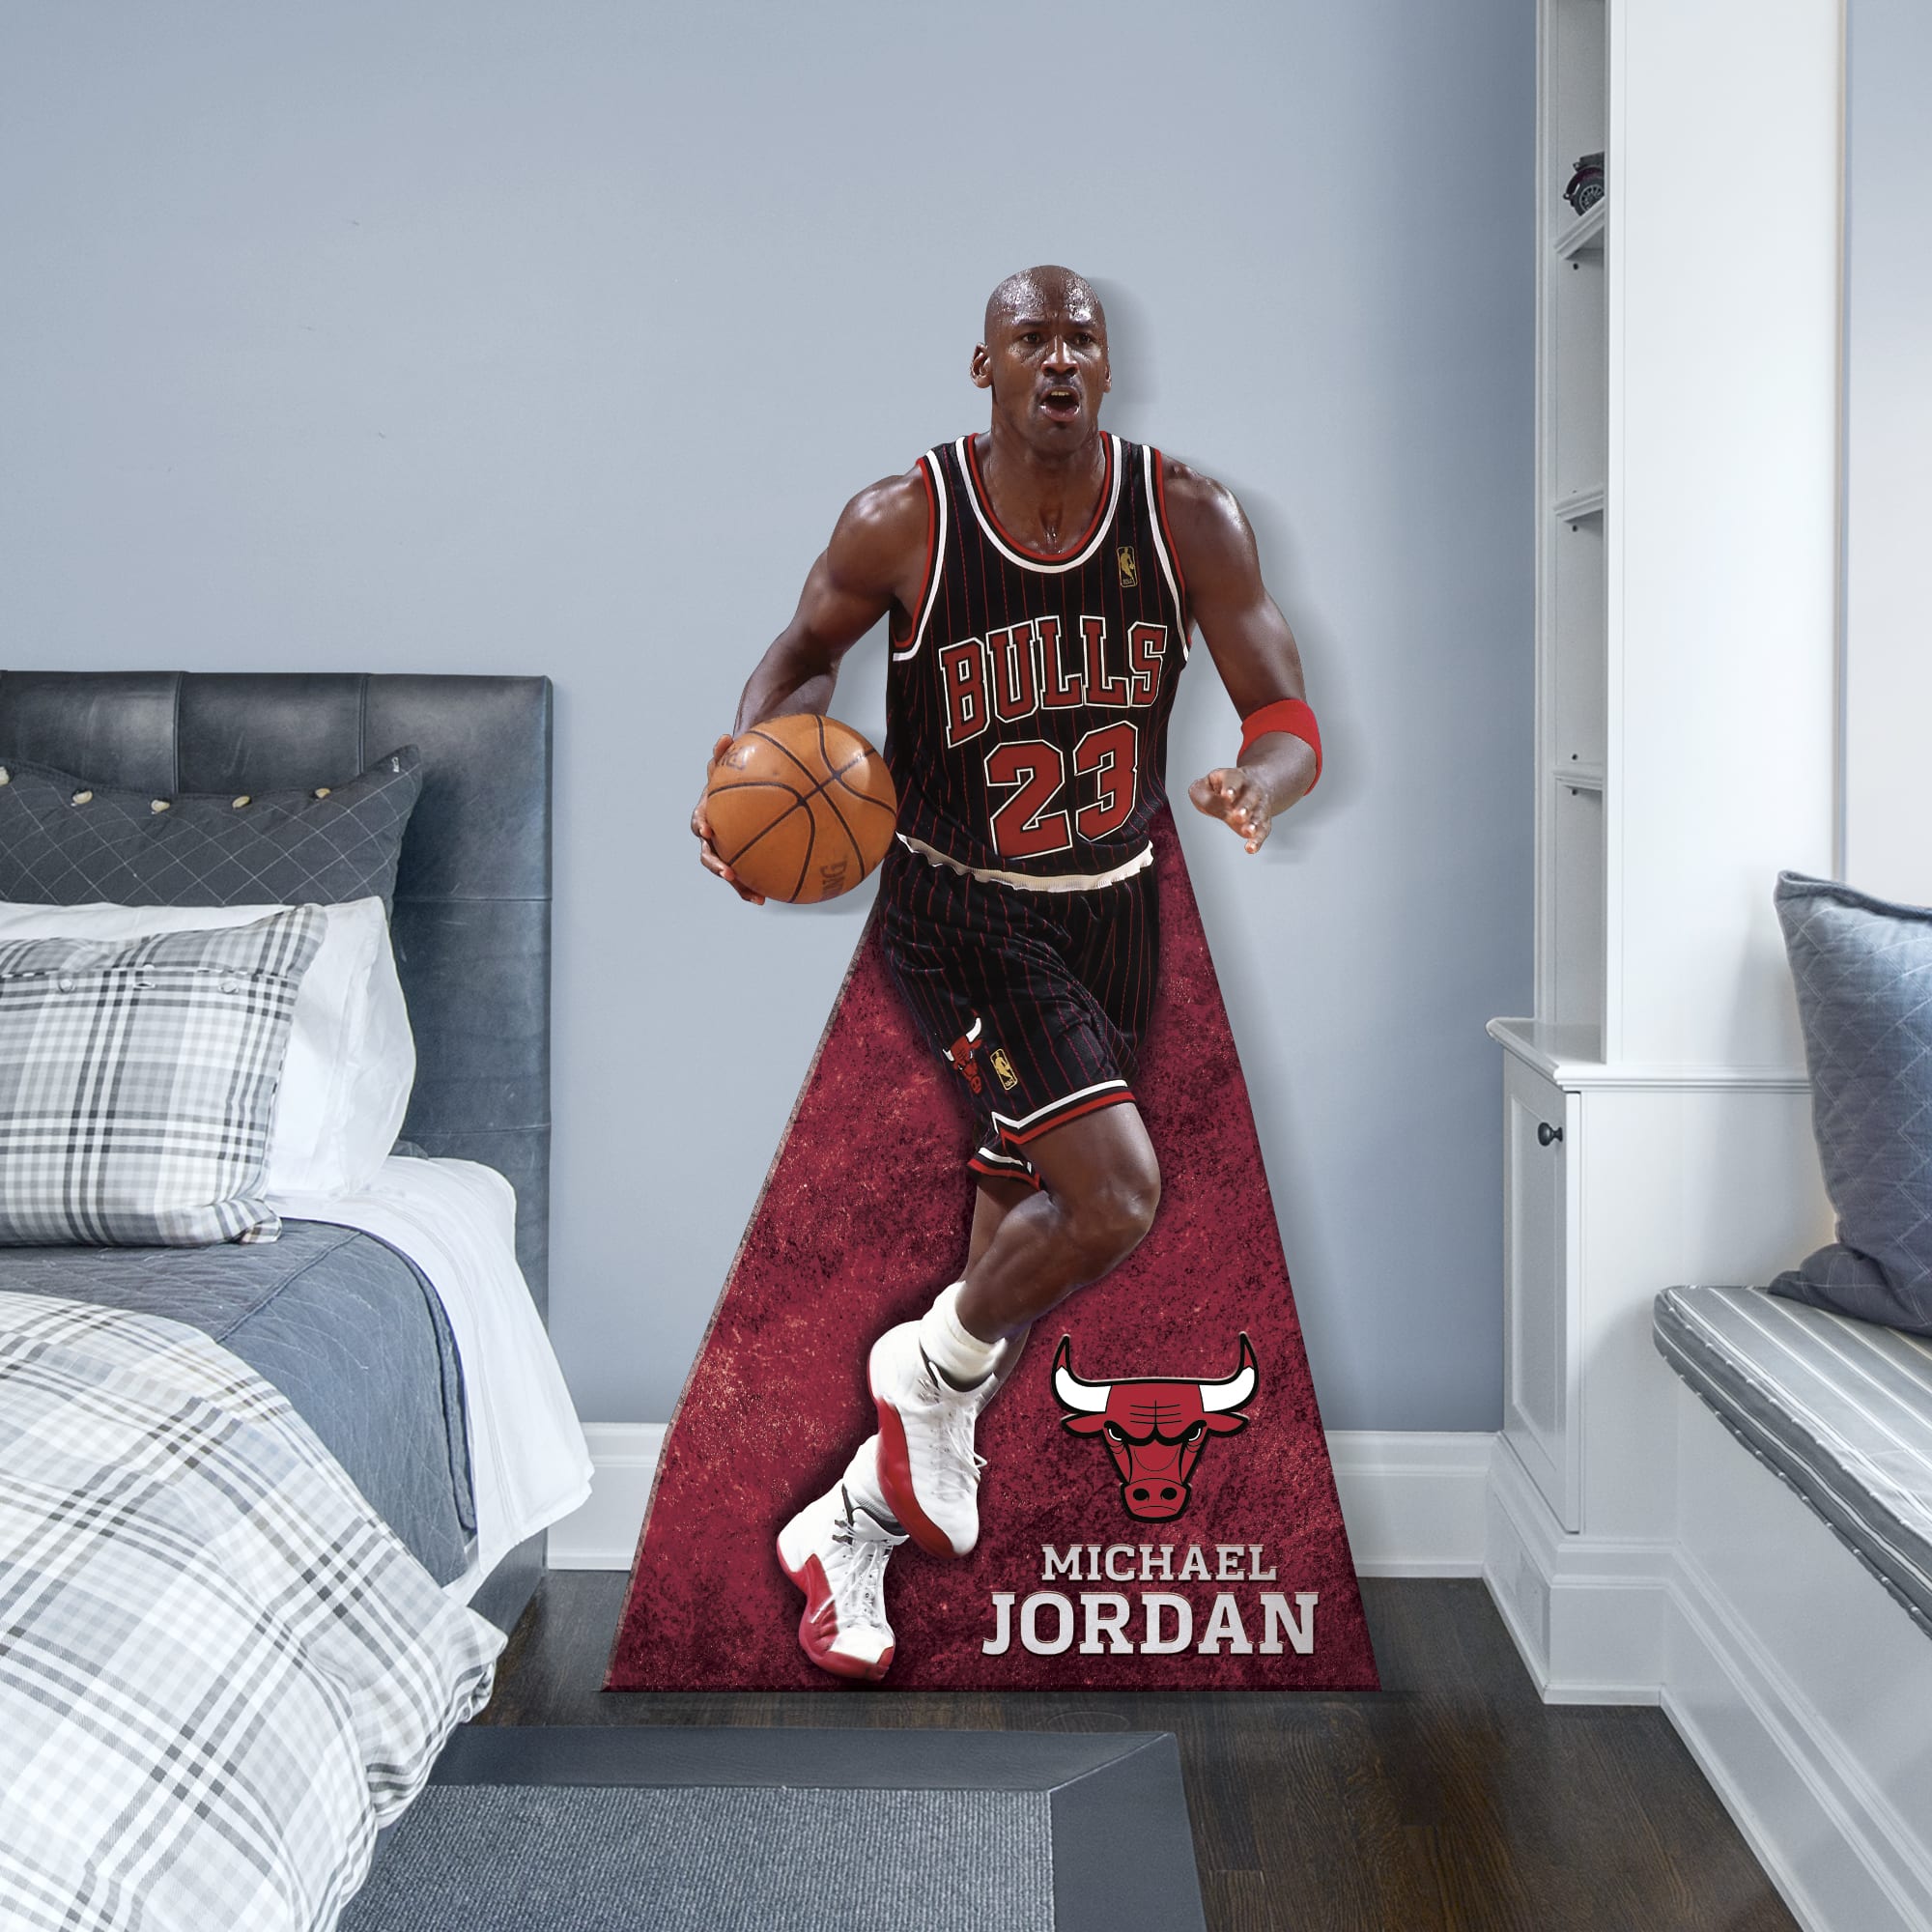 Michael Jordan Unsigned 16x20 Photo Chicago Bulls Jogging White Jersey -  Cardboard Legends